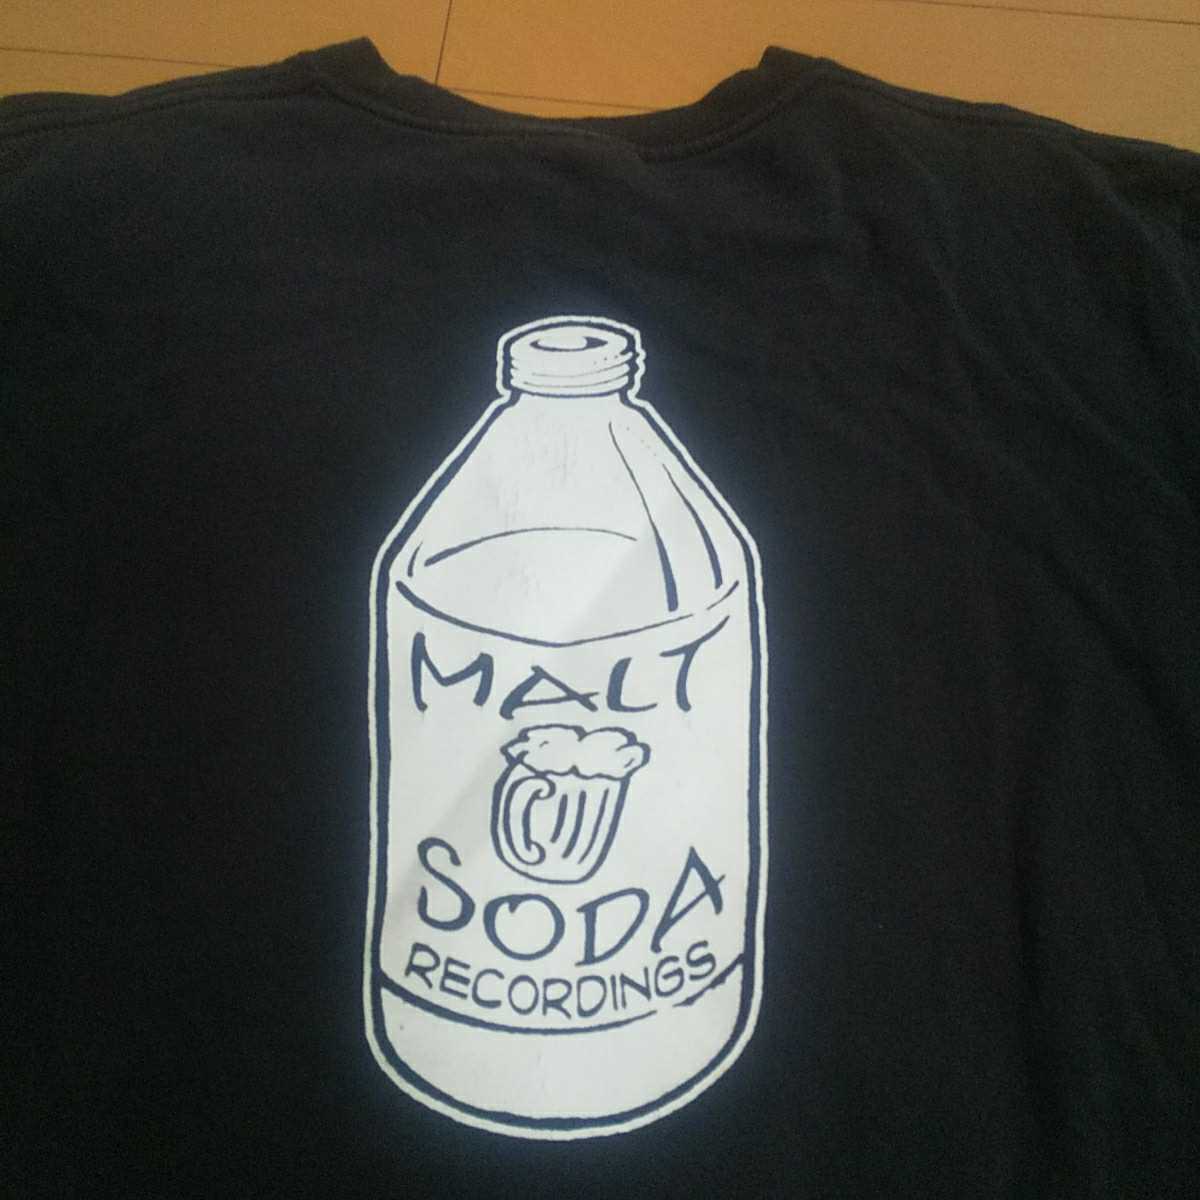 FLESH GORDO Tシャツ パンク ハードコア インディーズ MALT SODA RECORECORDINGS 古着 ヴィンテージの画像5